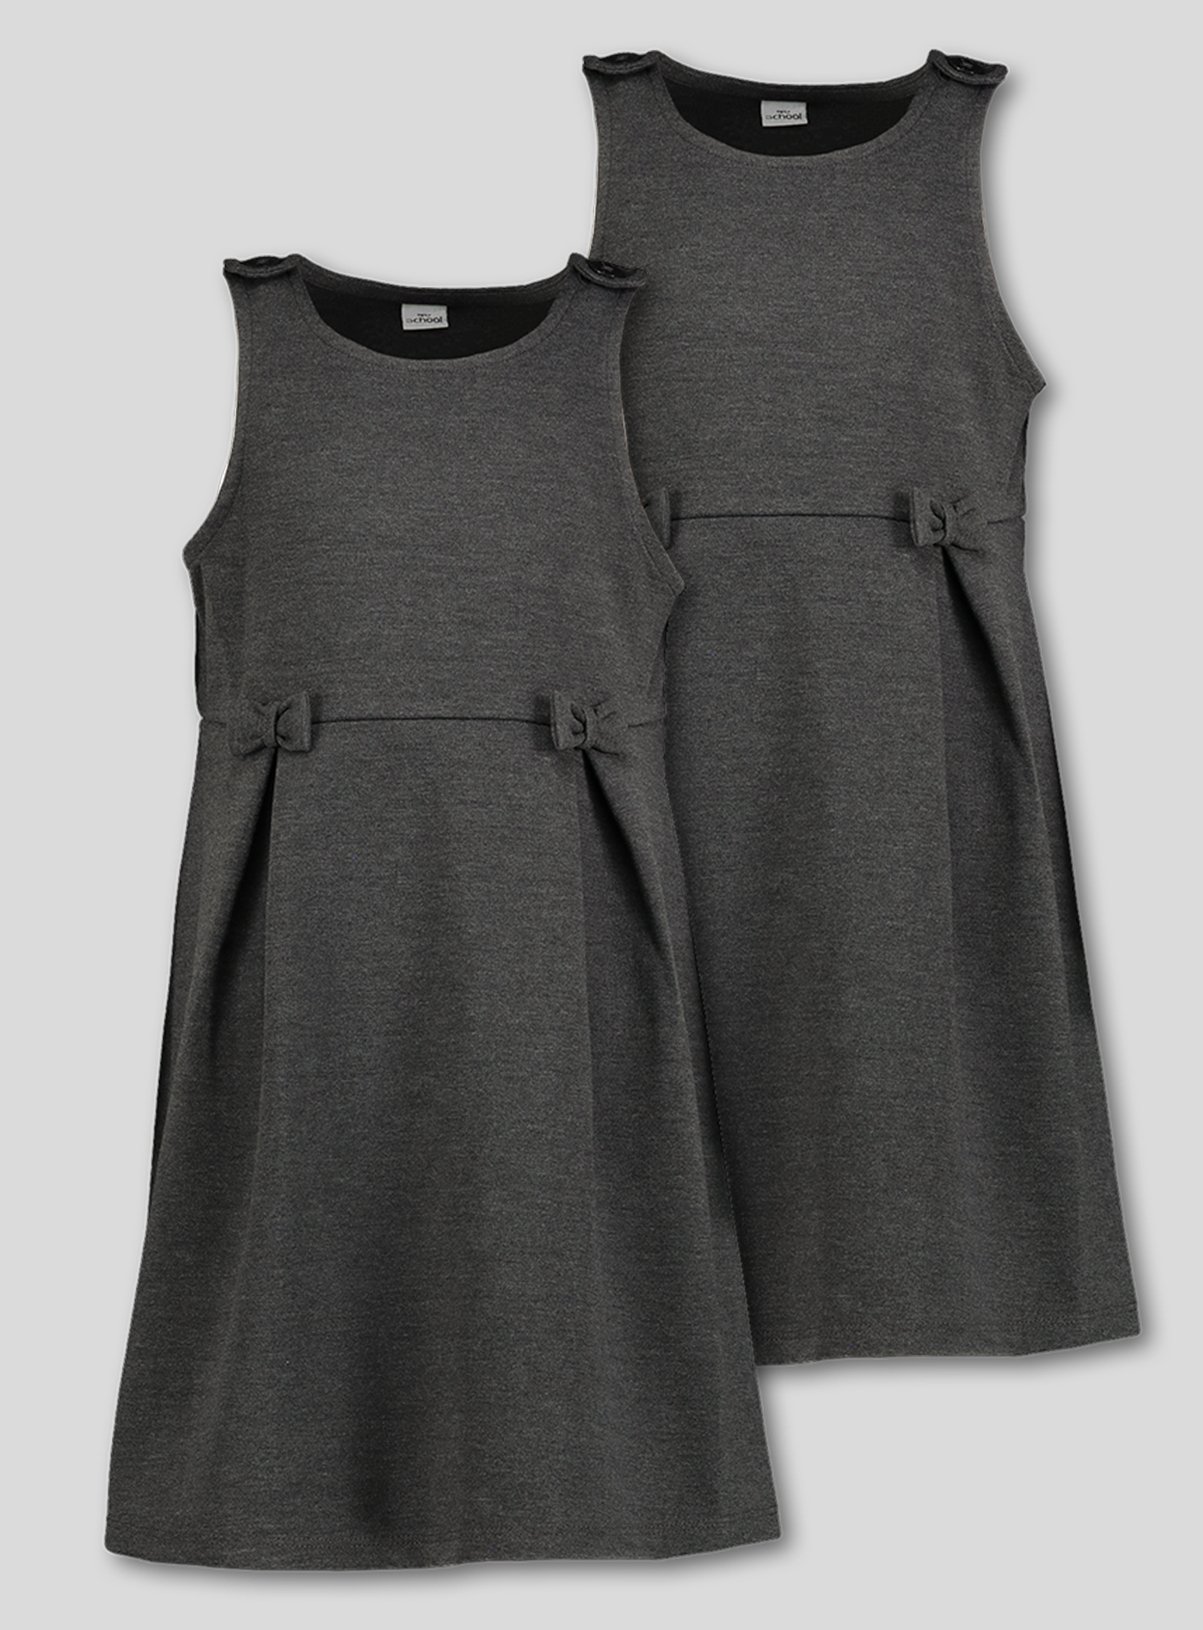 Buy Grey Jersey School Pinafore Dress 2 